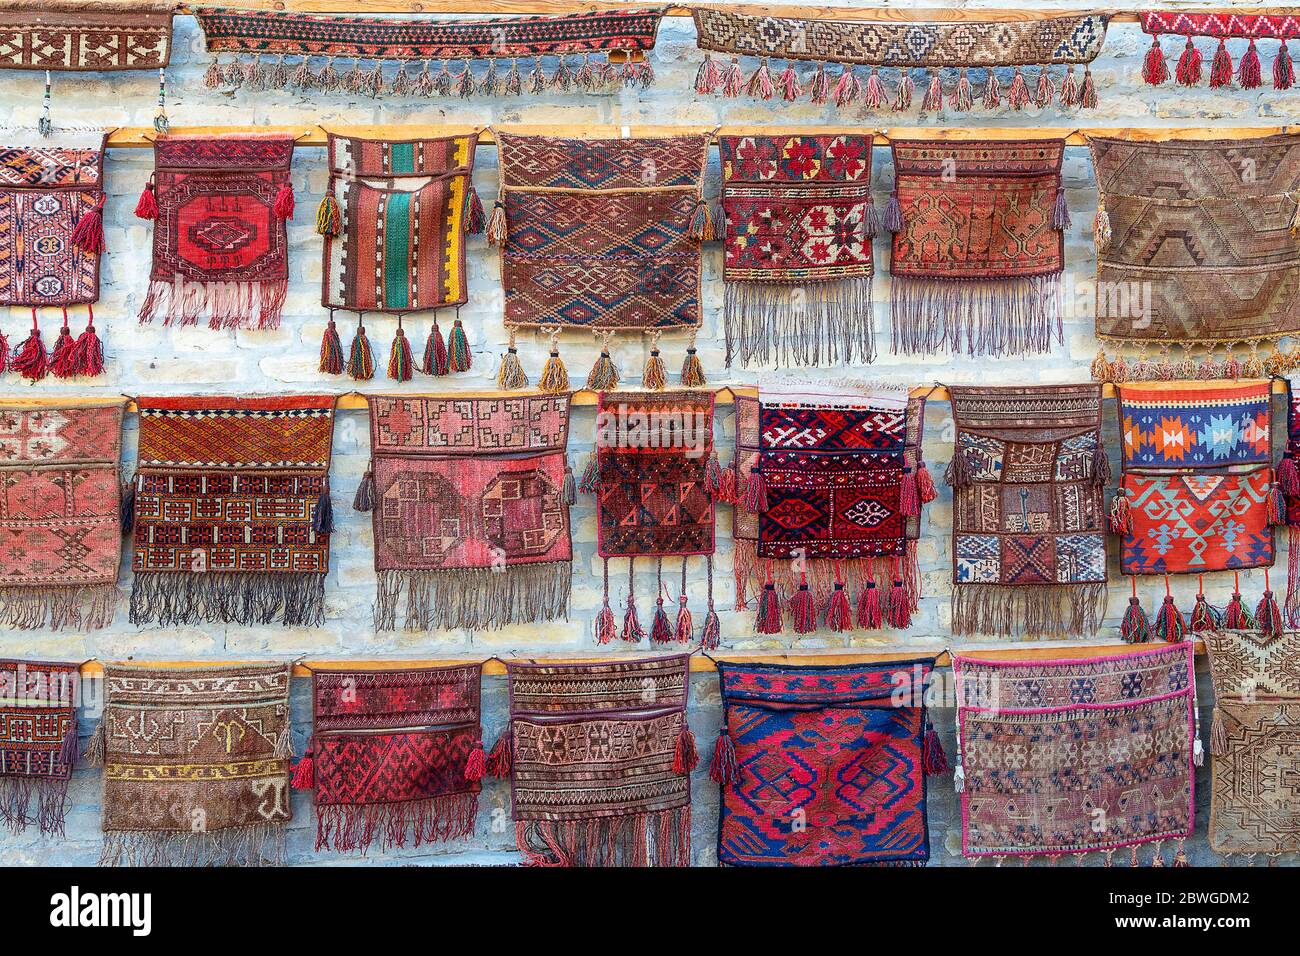 Tappeti orientali e tappeti colorati fatti a mano, Bukhara, Uzbekistan Foto Stock